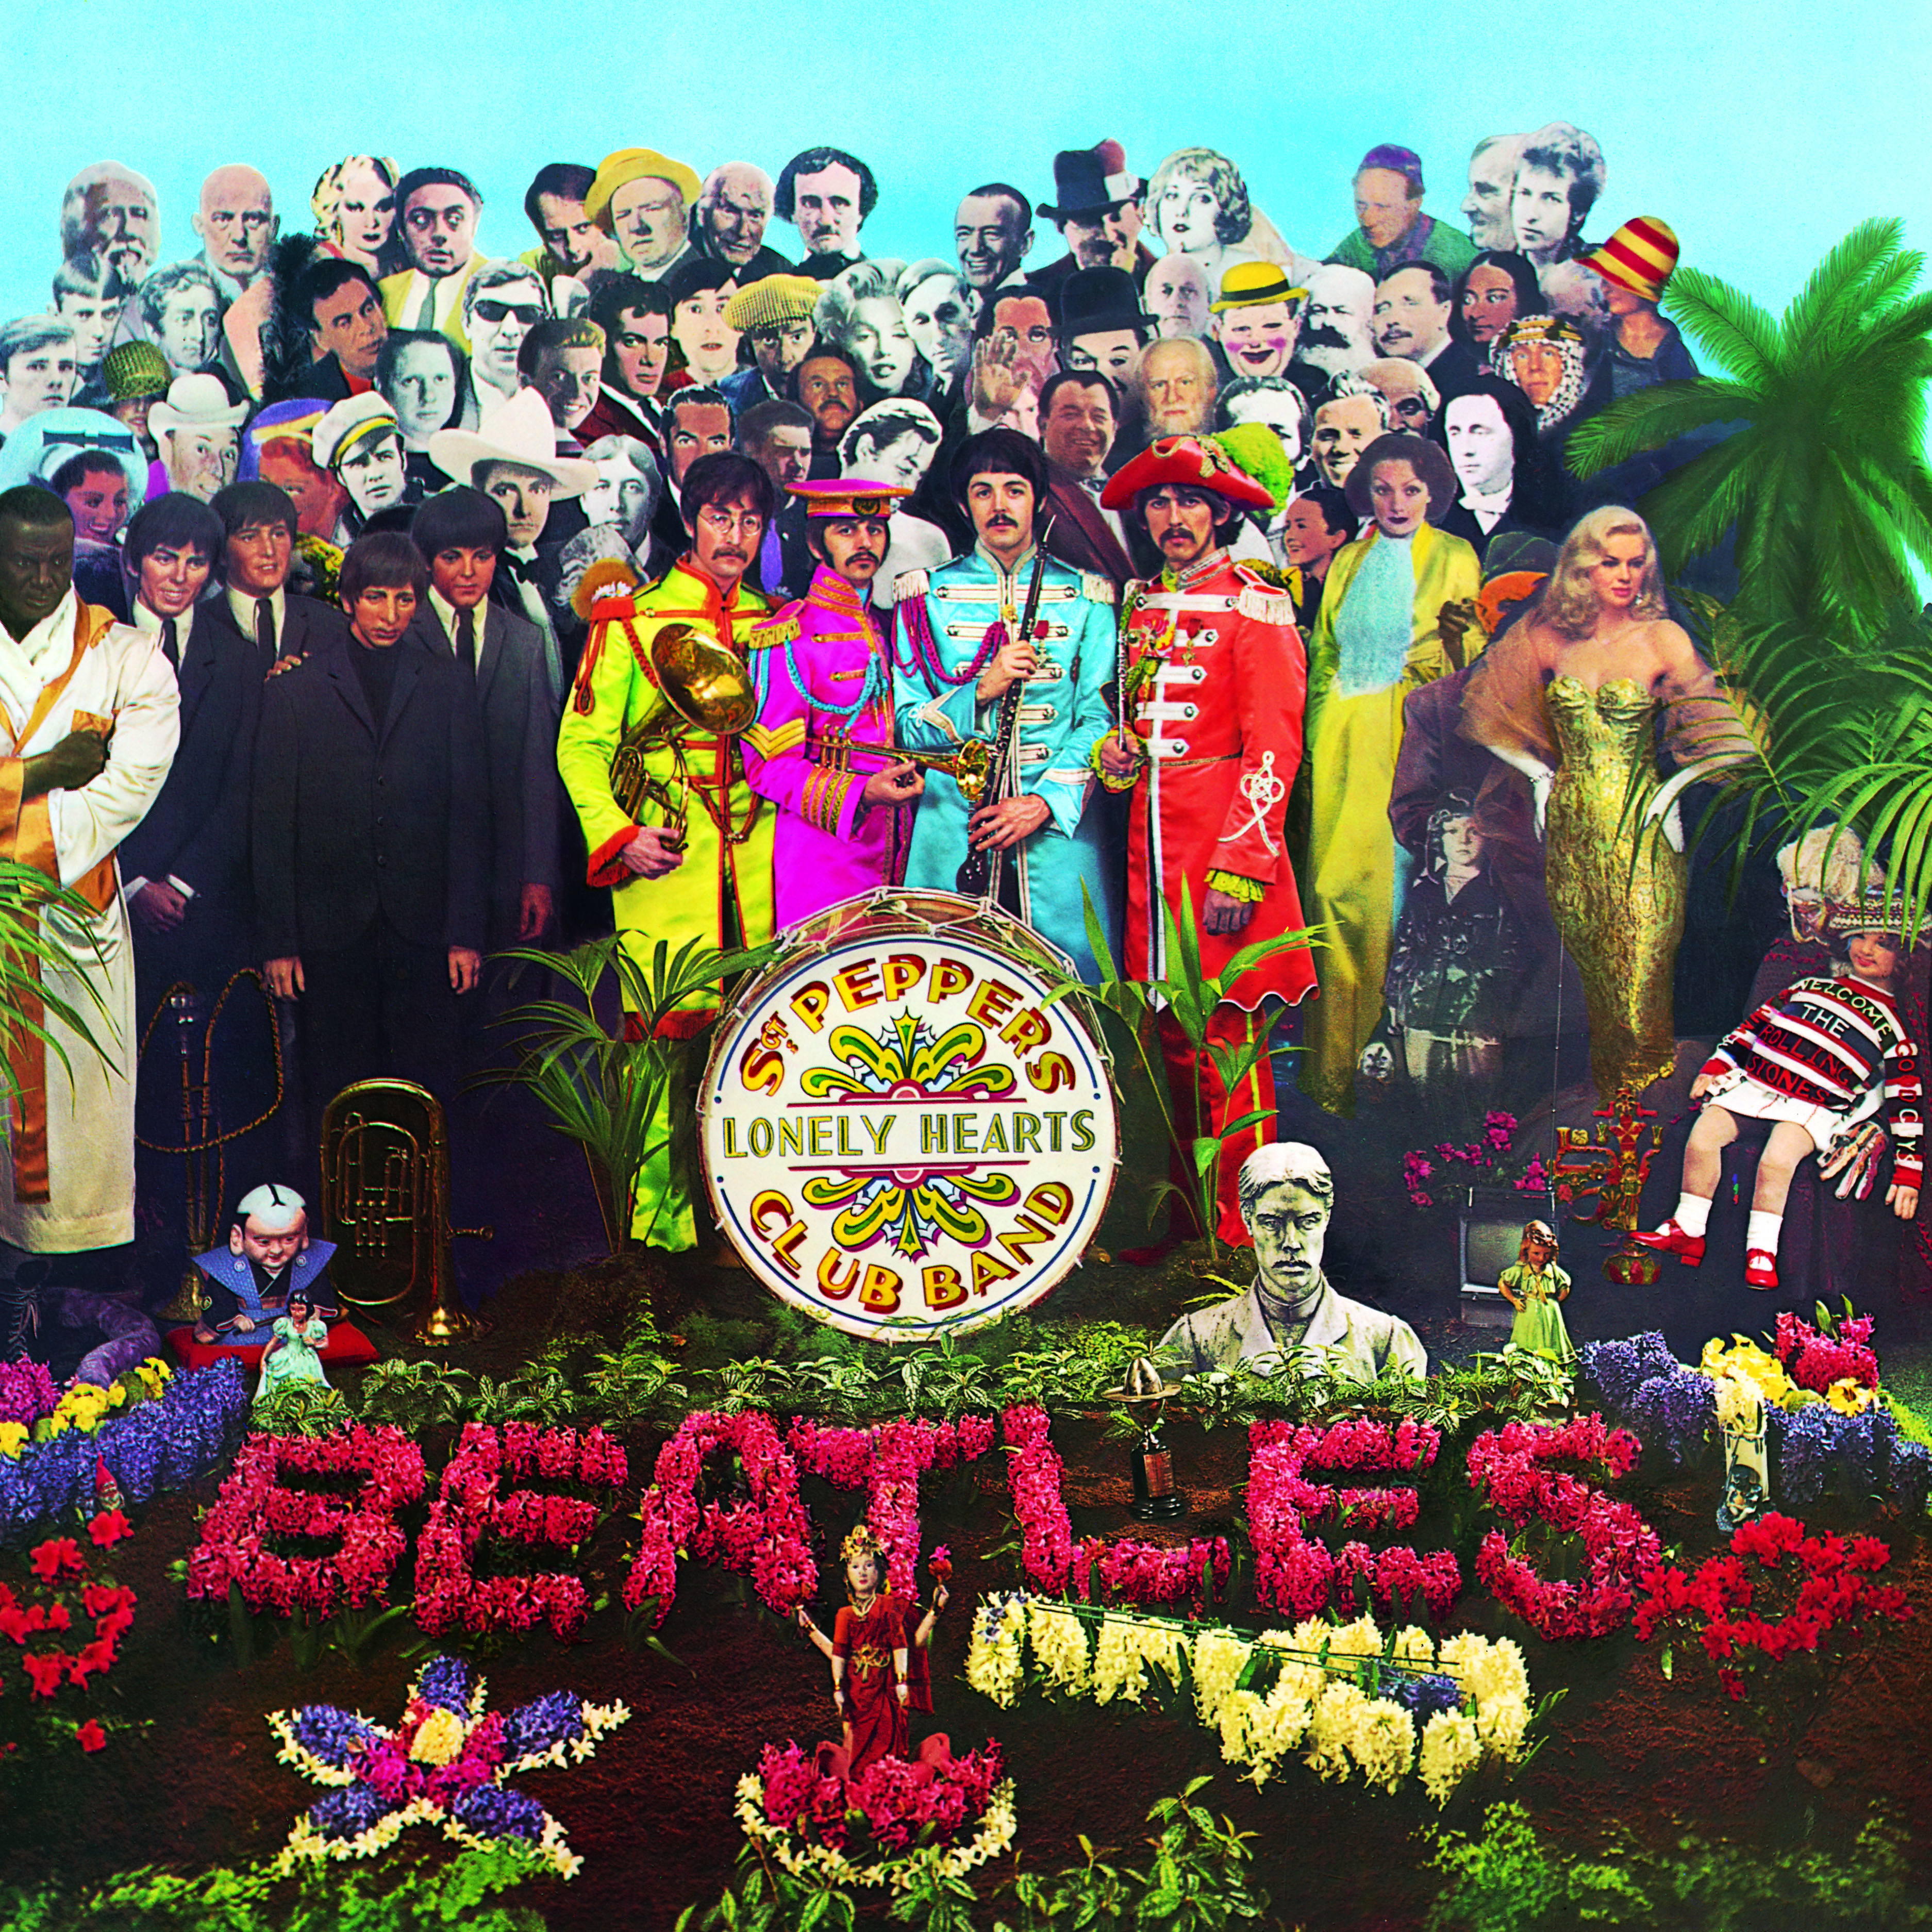 Beatles sgt pepper lonely. Битлз сержант Пеппер. Обложка альбома Битлз клуб одиноких сердец сержанта Пеппера. Sgt Pepper's Lonely Hearts Club Band обложка. The Beatles Sgt. Pepper's Lonely Hearts Club Band обложка.